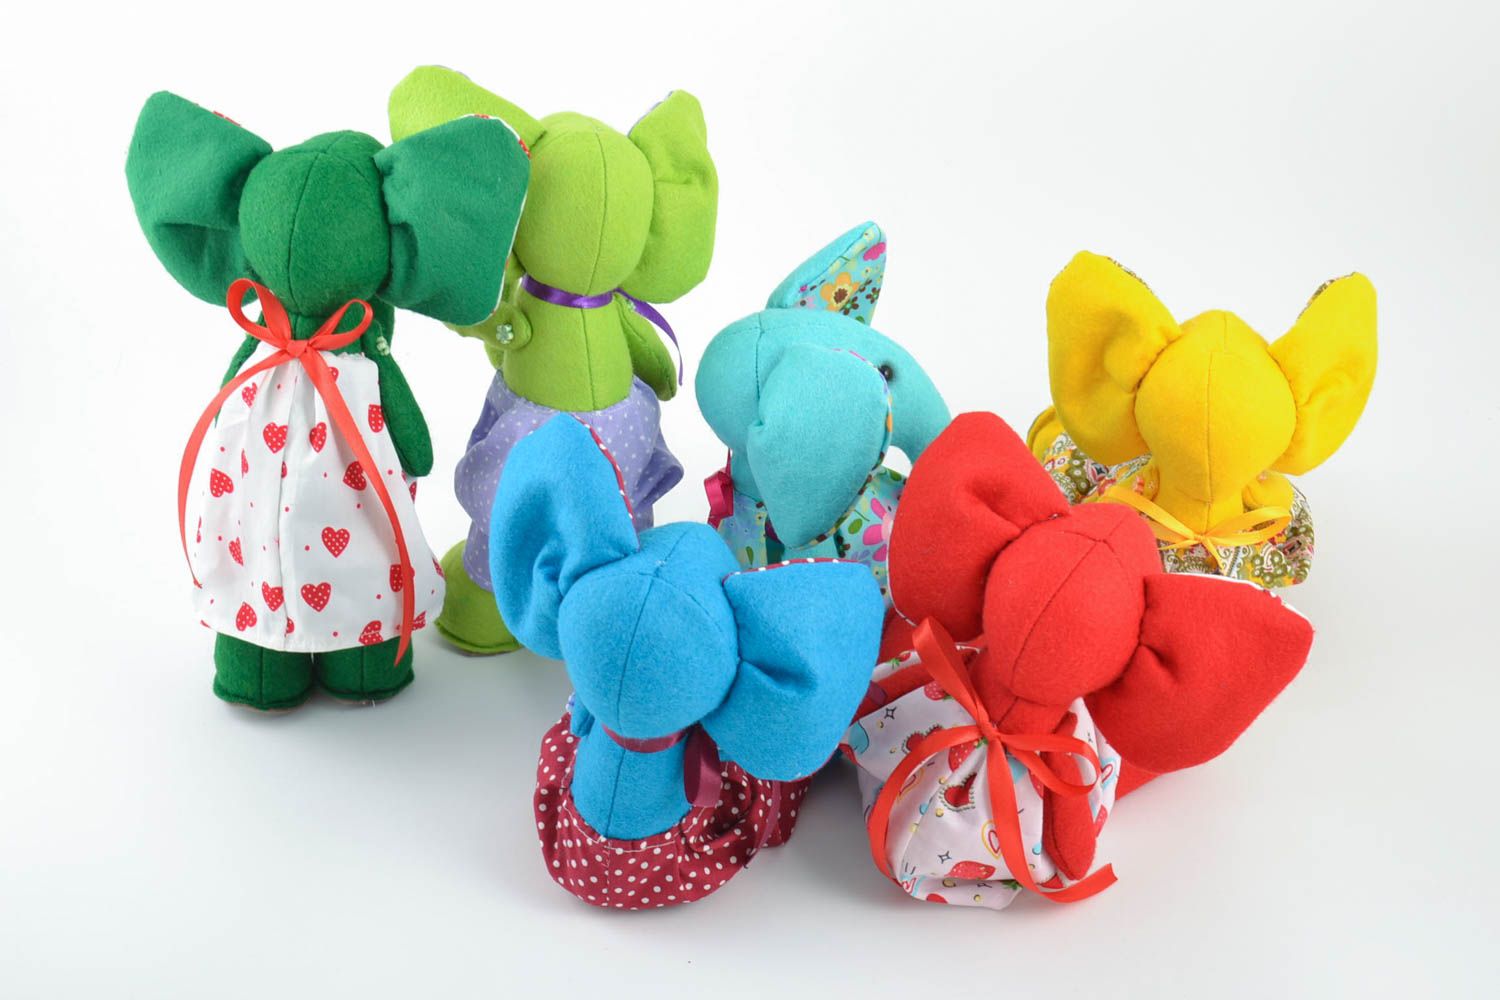 Filz Kuscheltiere Set 5 Stück Elefanten verschiedener Farben schön handmade foto 2